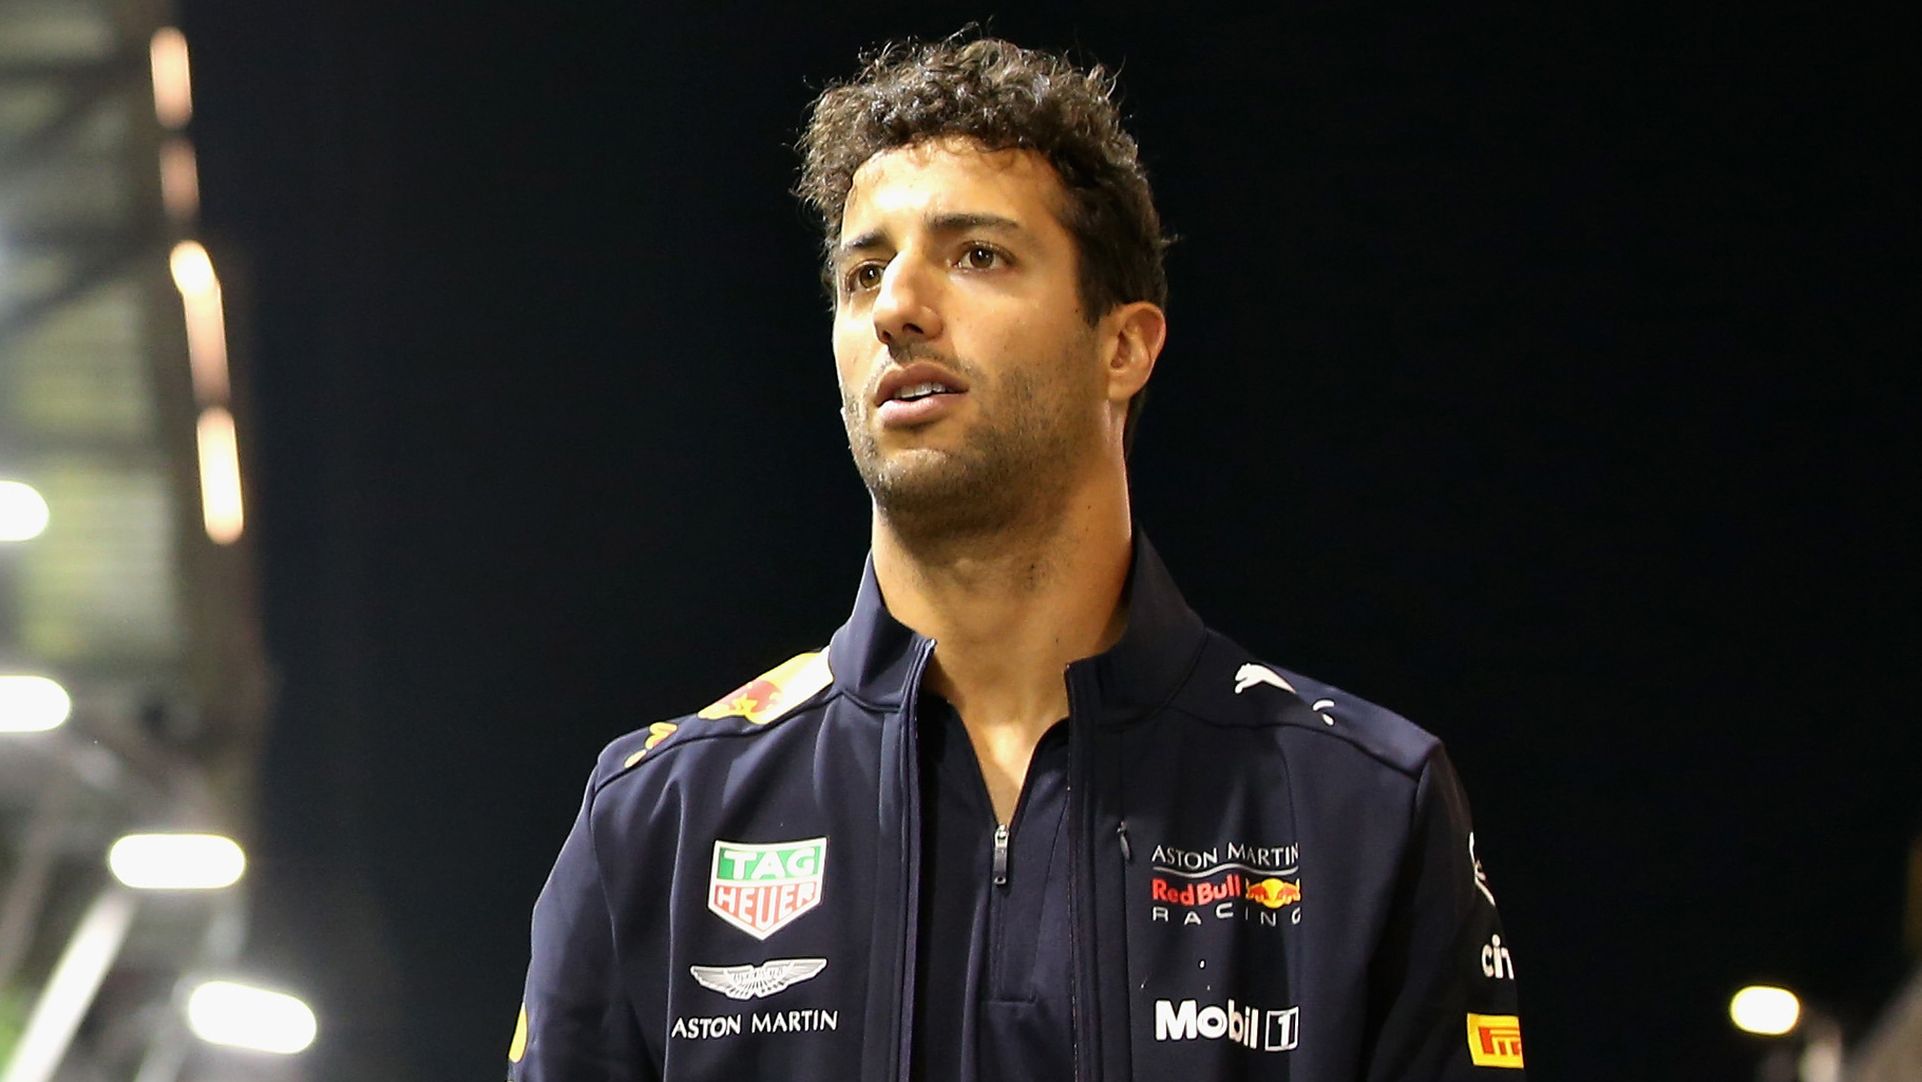 Daniel Ricciardo and Max Verstappen as teammates in 2018.